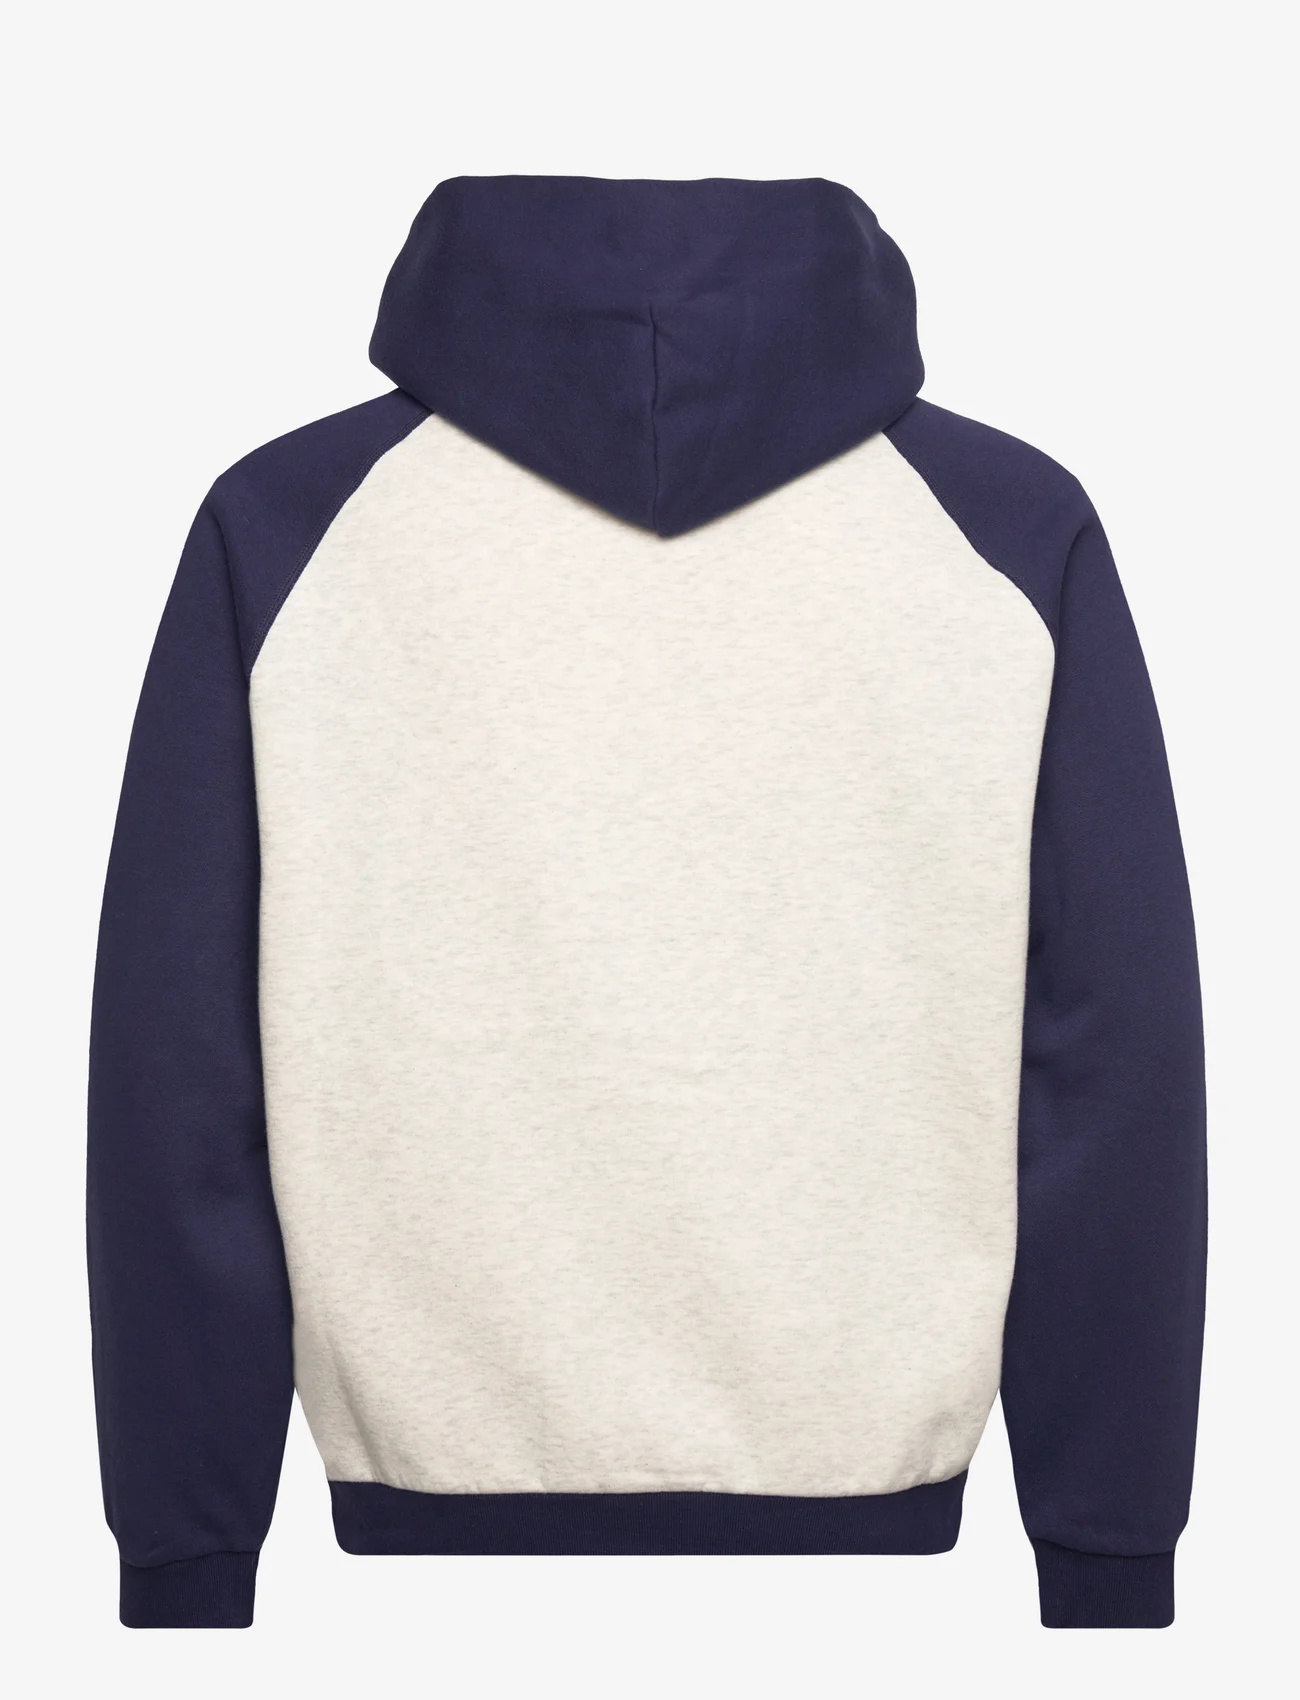 Champion - Hooded Sweatshirt - hoodies - gray melange  light - 1